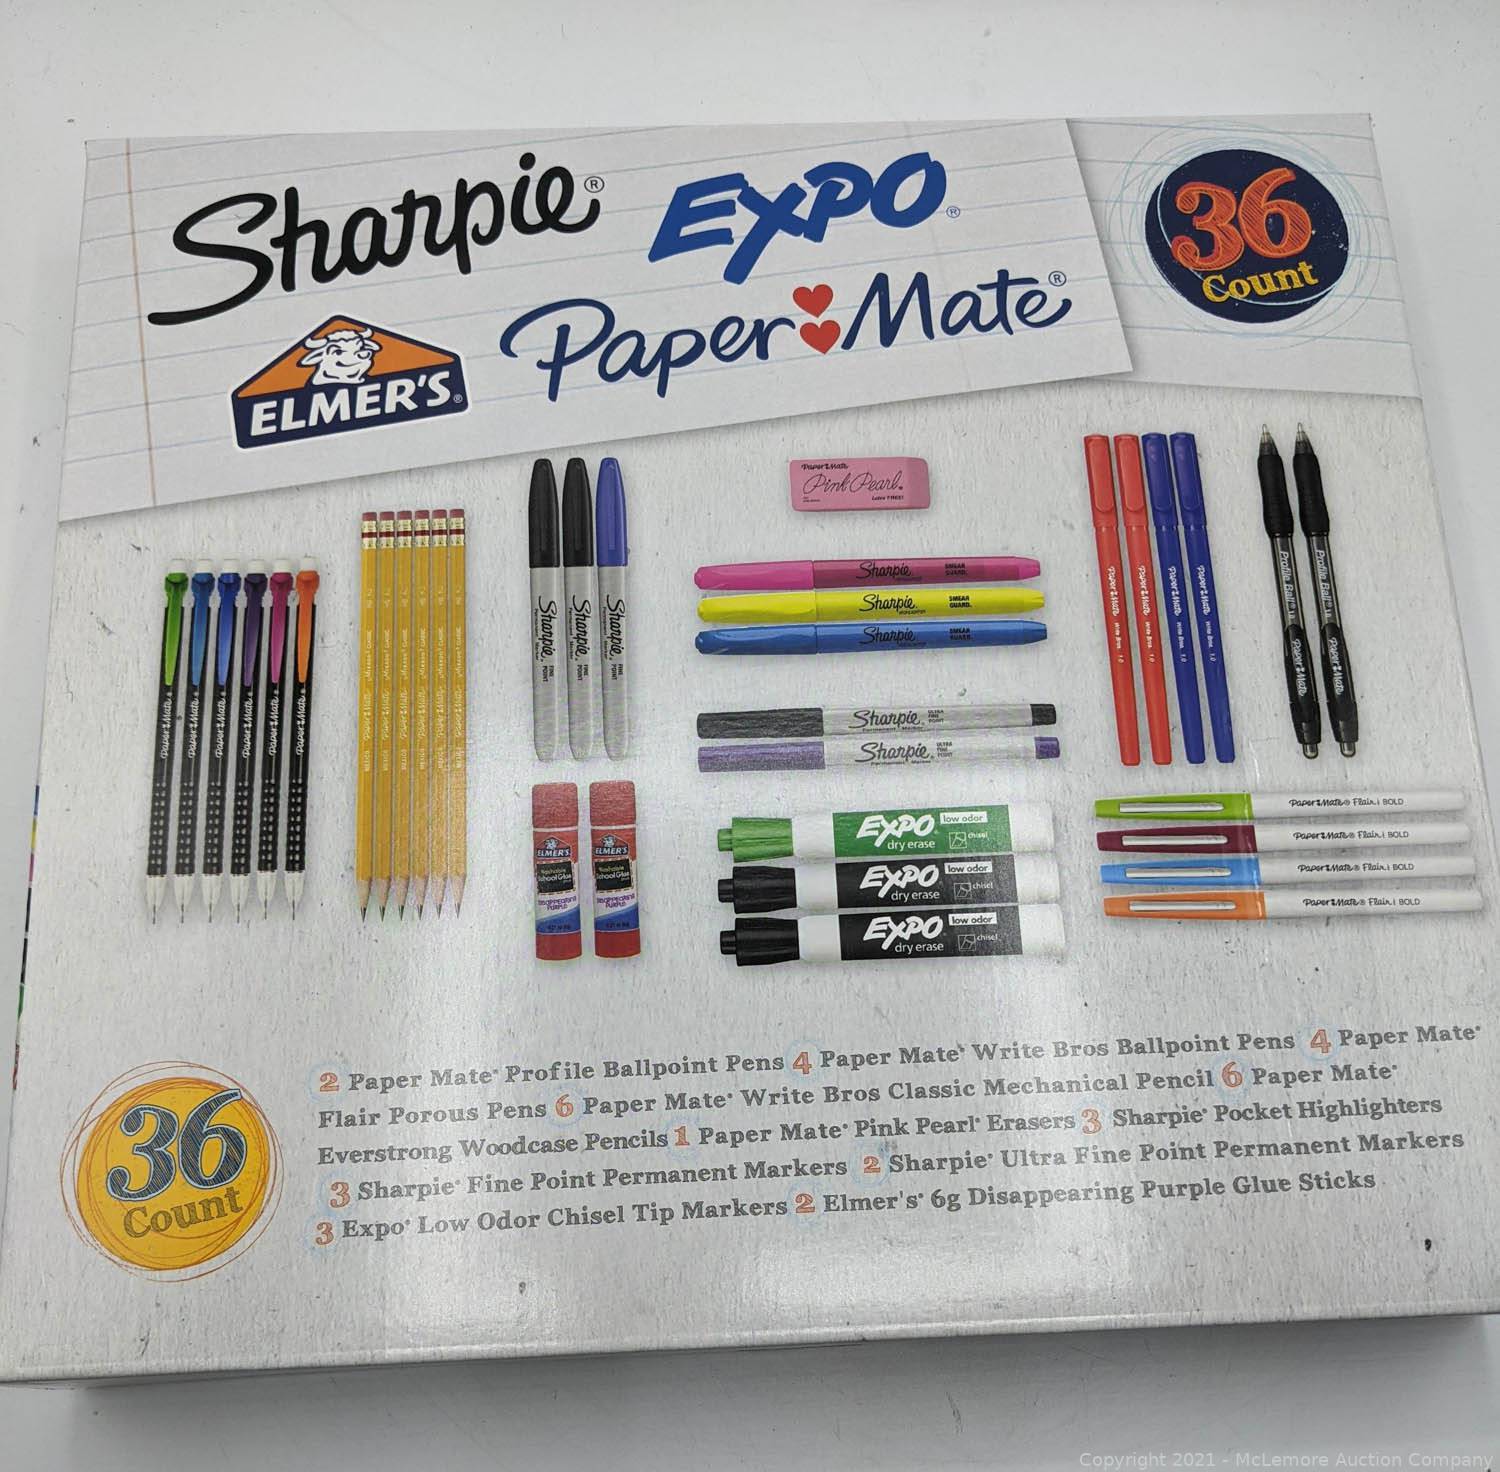 40 Count Sharpie Expo Elmer's Paper Mate School Glue Profile Pens